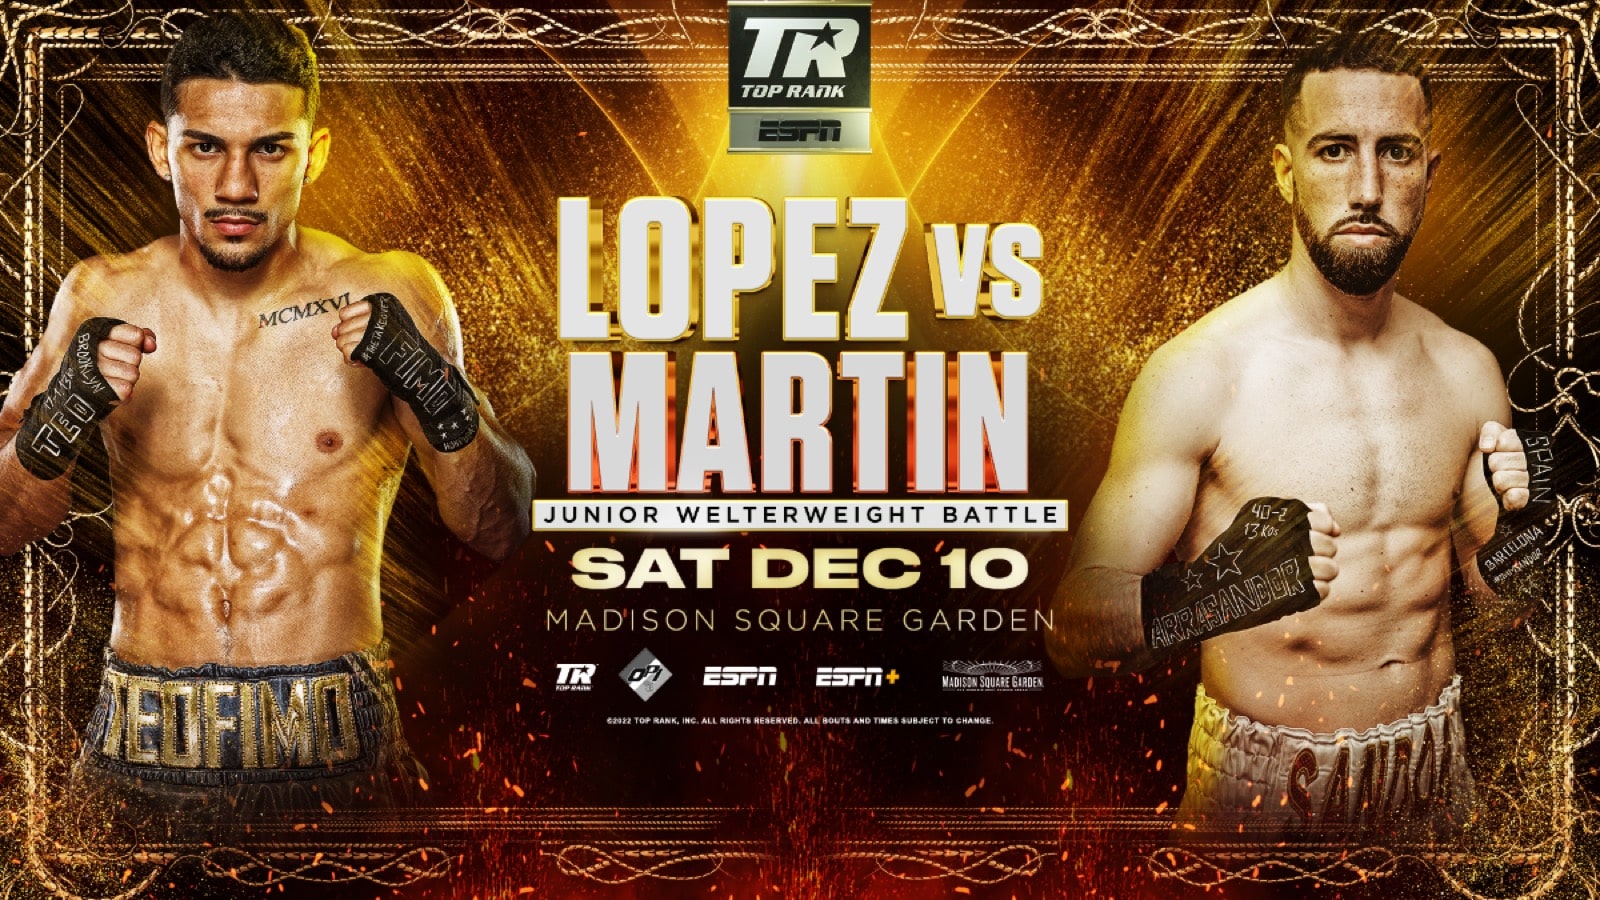 Teofimo Lopez v Sandor Martin headlines a loaded quadruple-header LIVE on ESPN